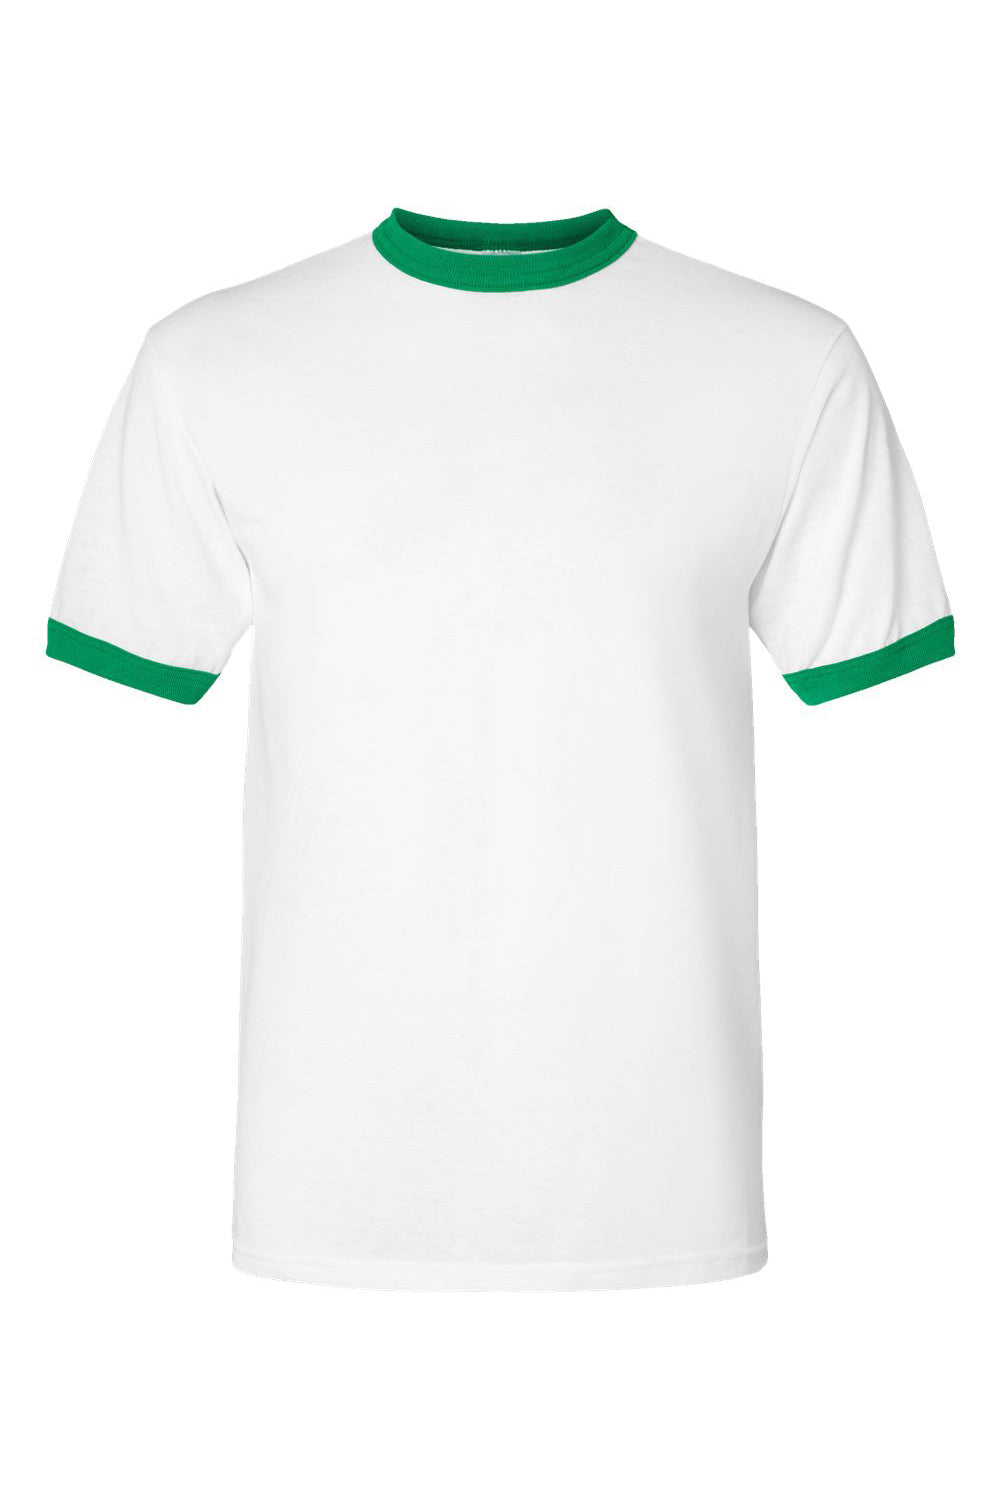 Augusta Sportswear 710 Mens Ringer Short Sleeve Crewneck T-Shirt White/Kelly Green Flat Front